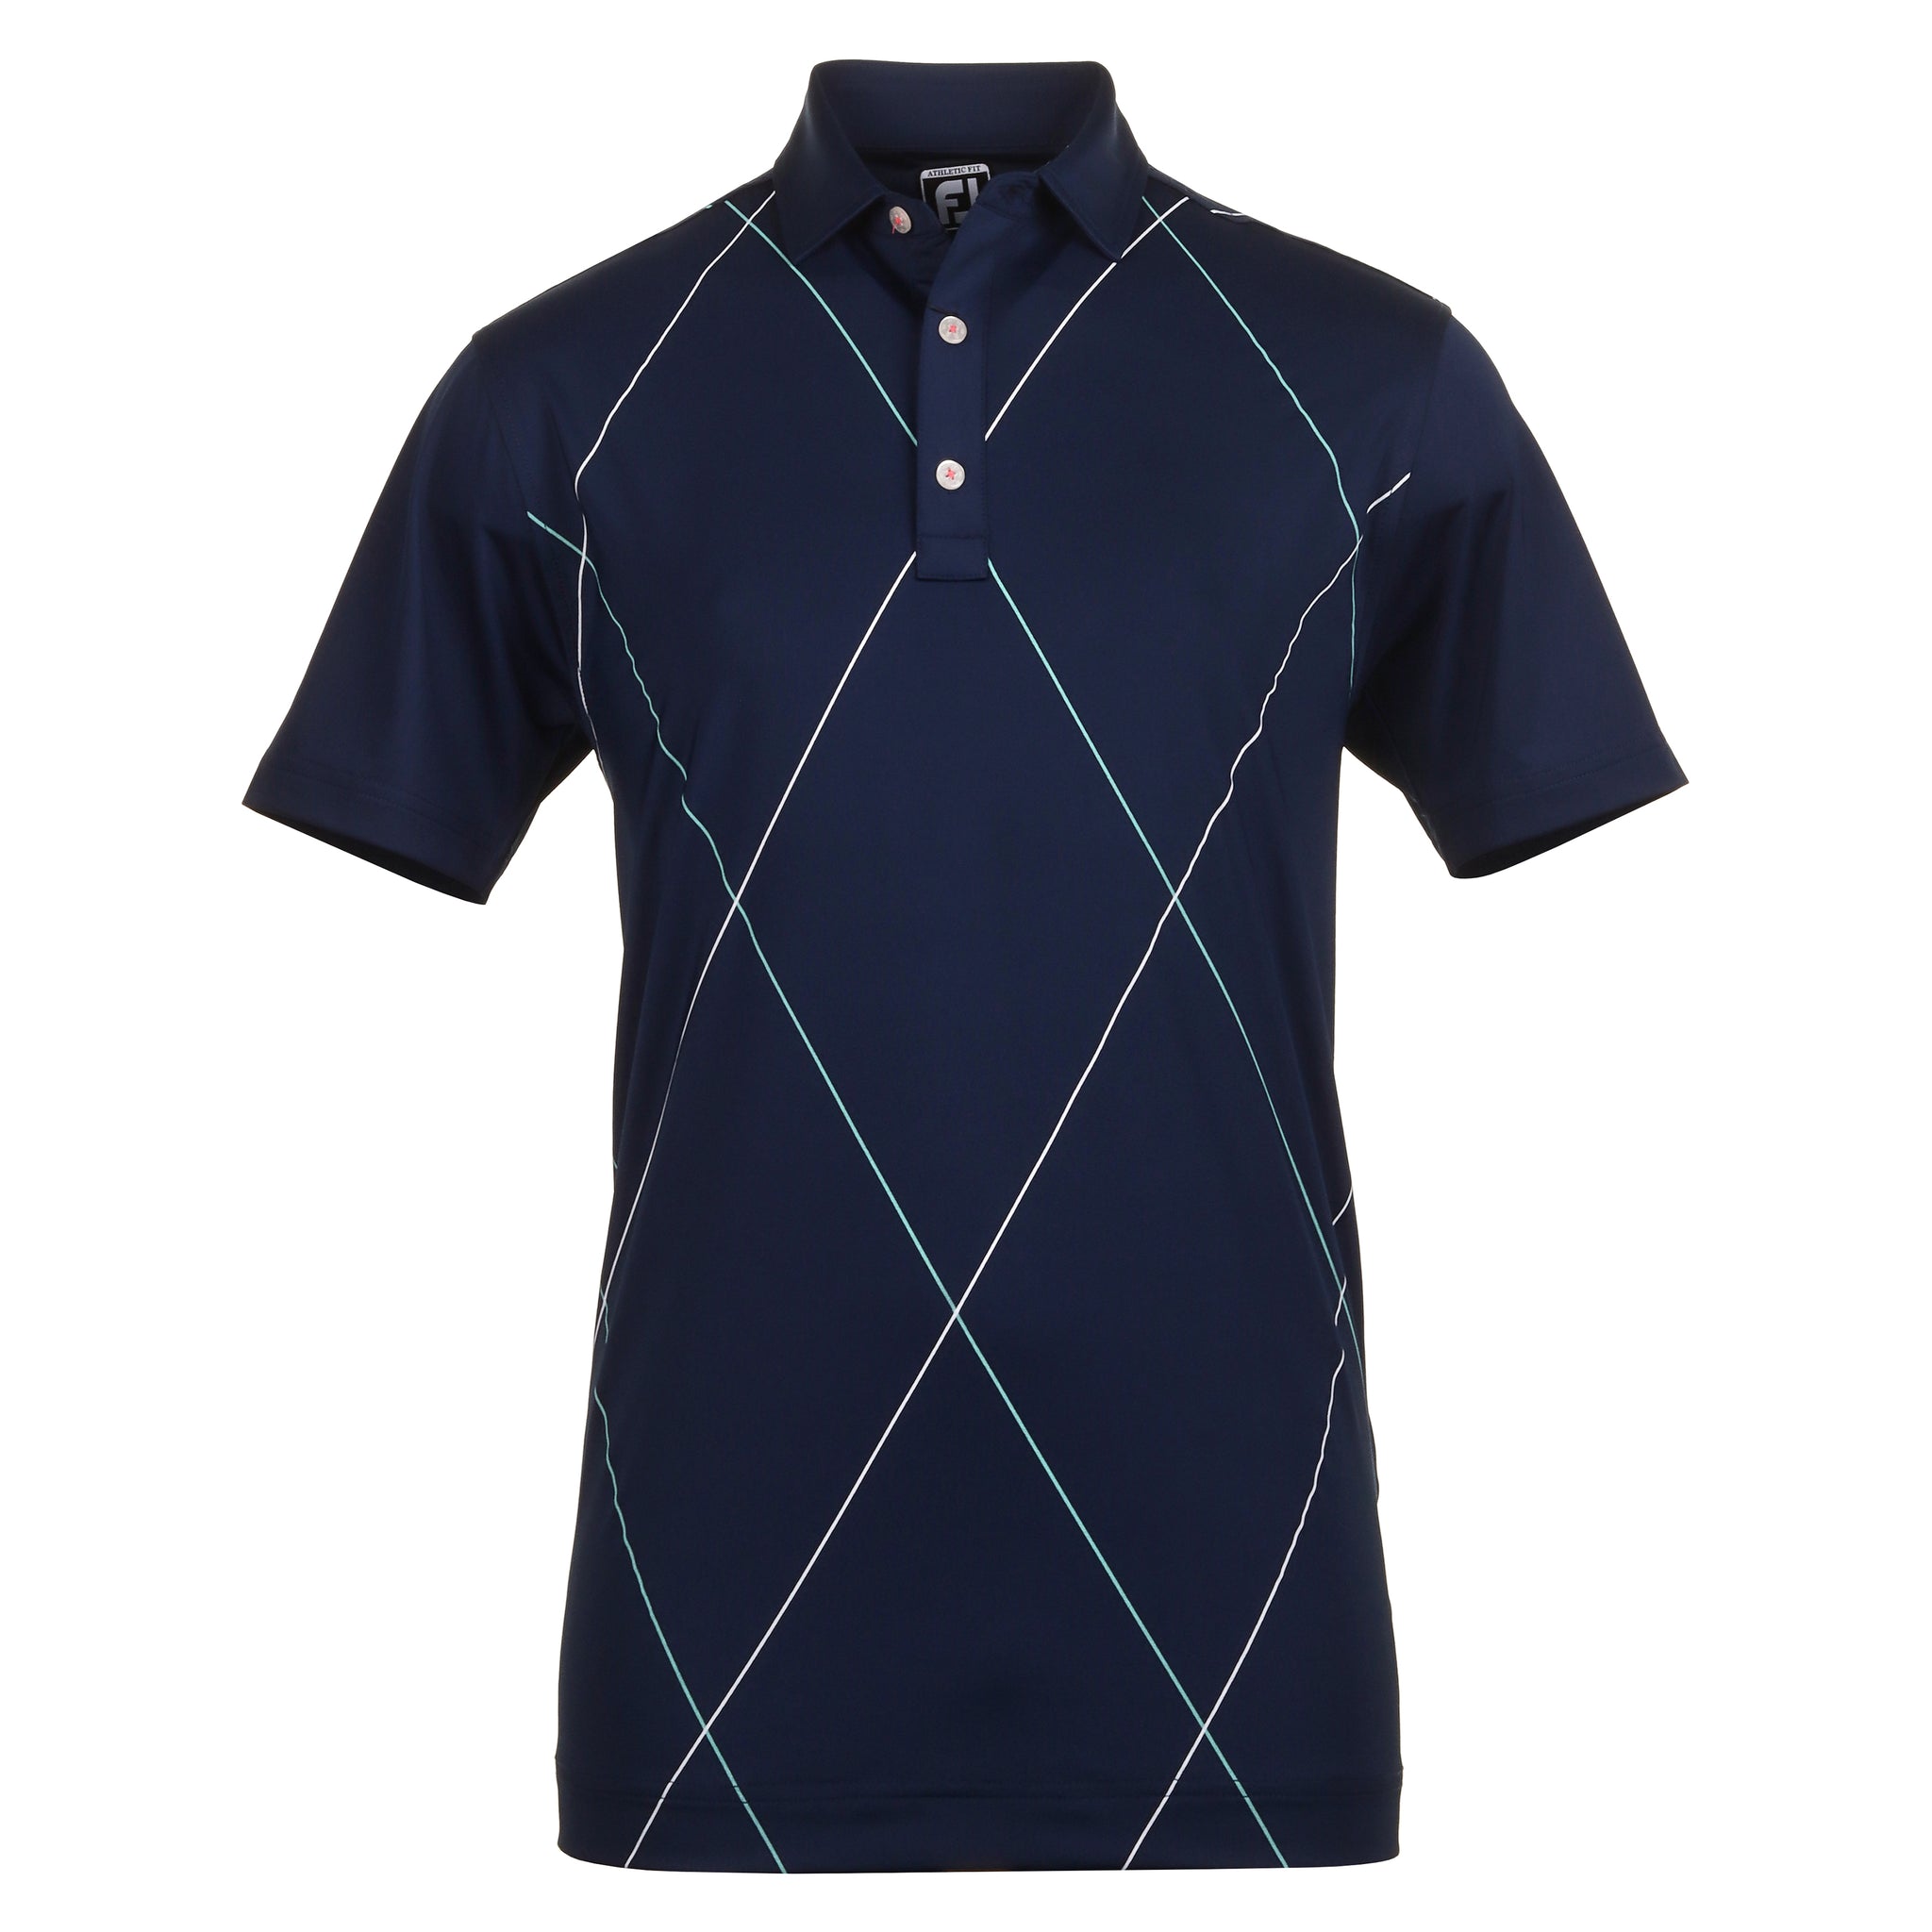 FootJoy Raker Print Lisle Golf Shirt